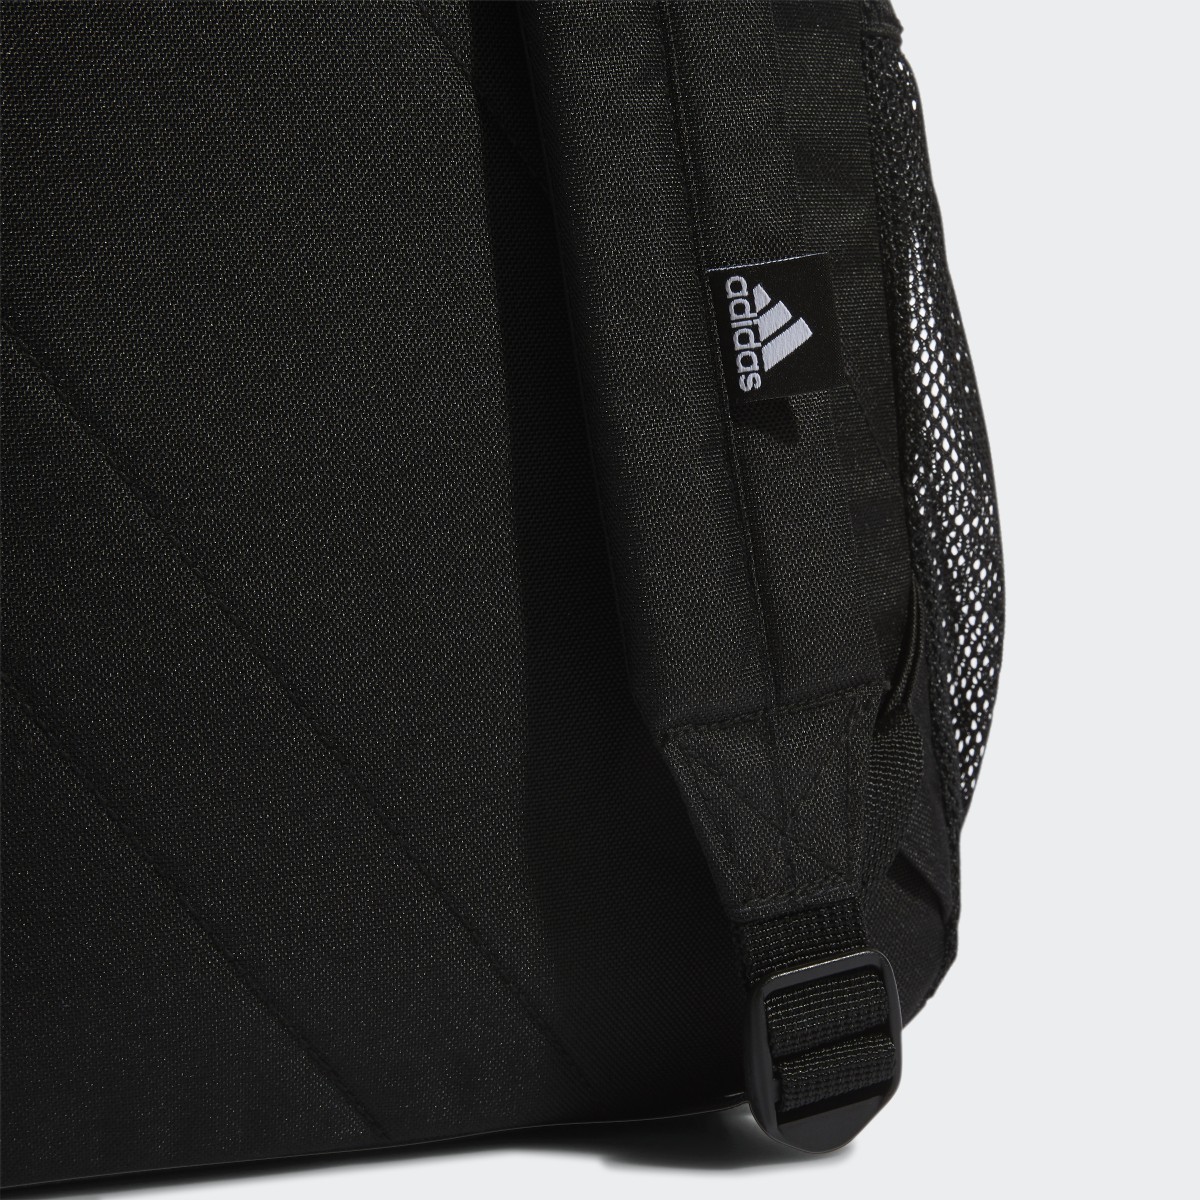 Adidas Ready Backpack. 8